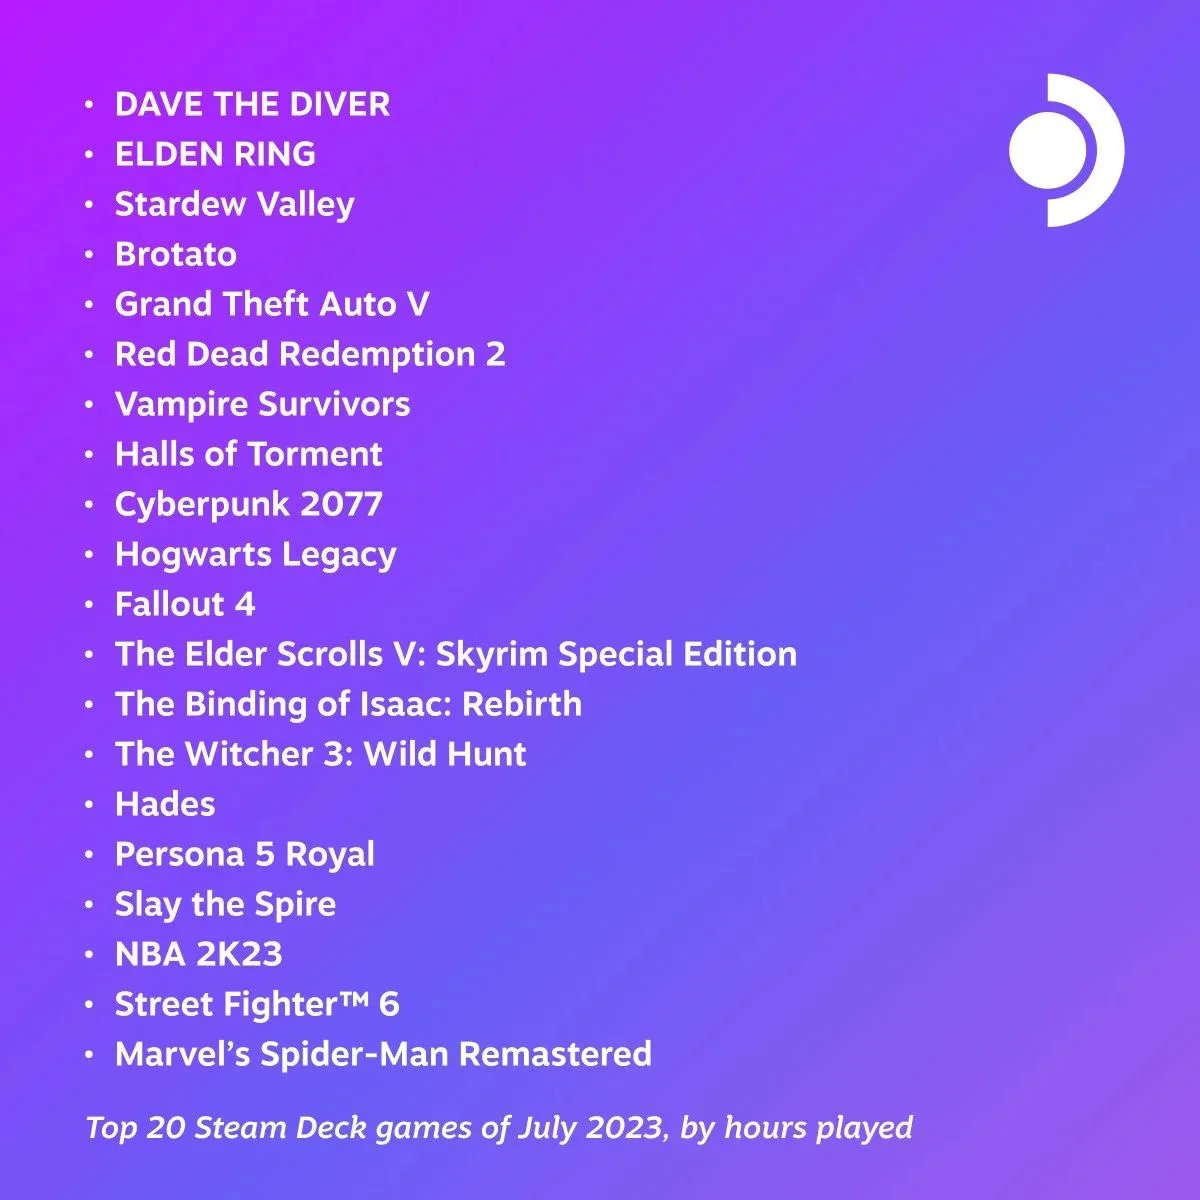 Dave the Diver оказалась популярнее Elden Ring в топе игр для Steam Deck за июль - фото 1